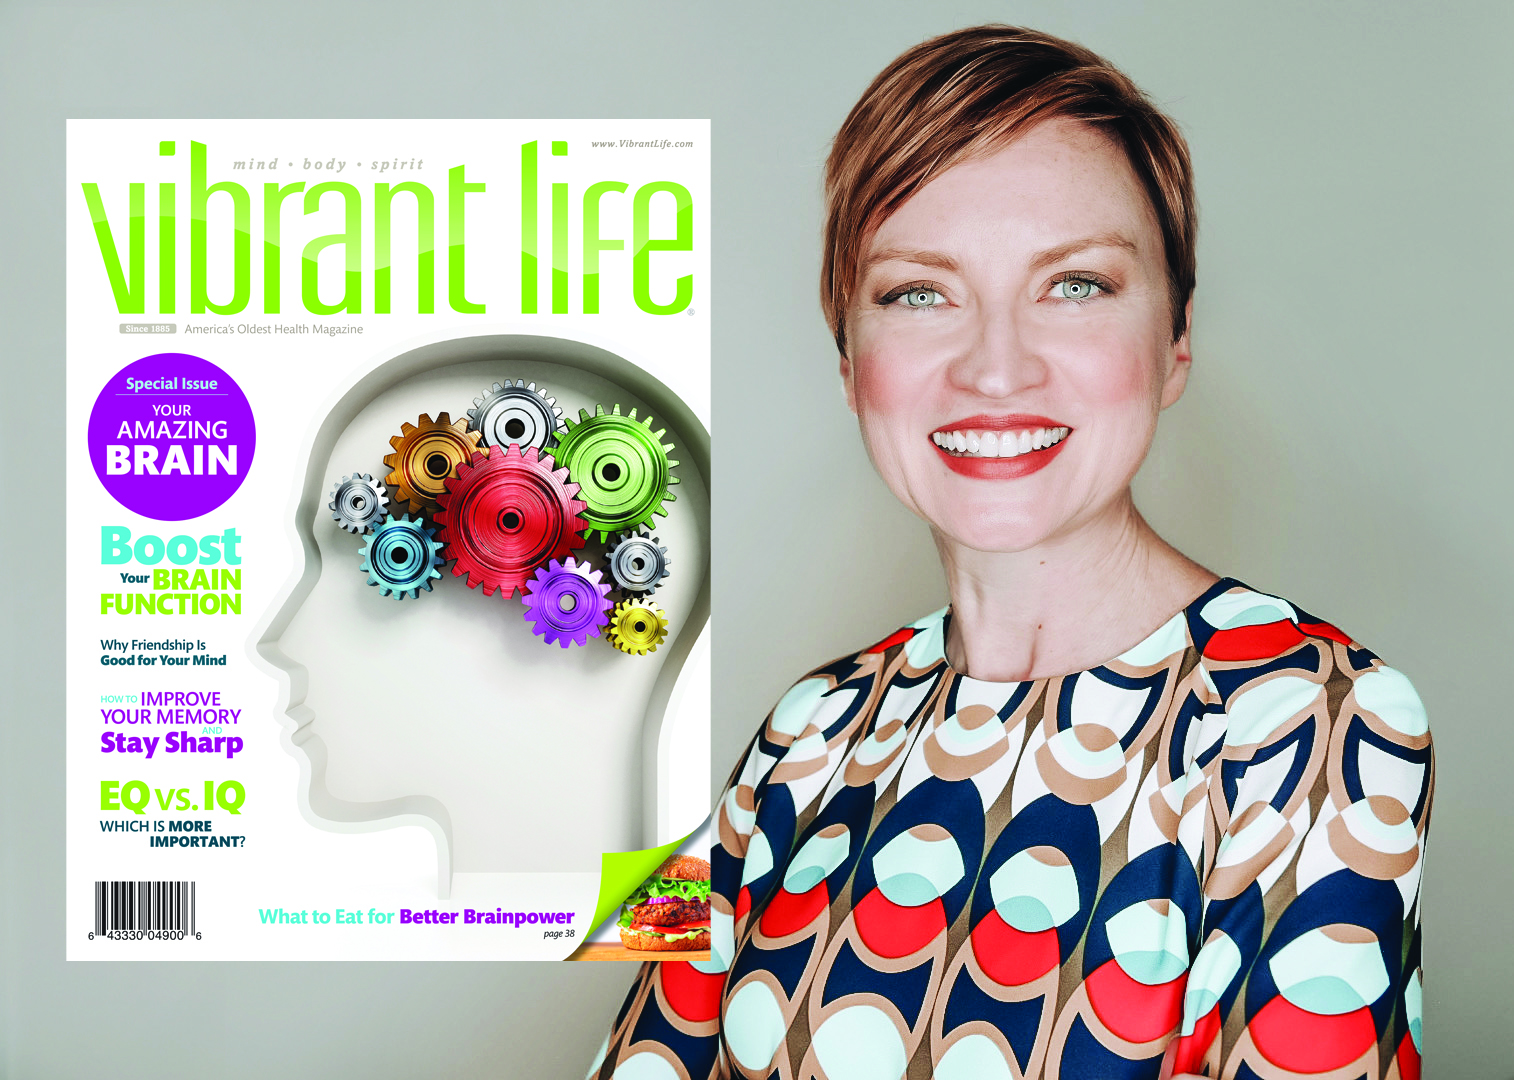 Vibrant Life editor Heather Quintana and copy of Vibrant Life magazine